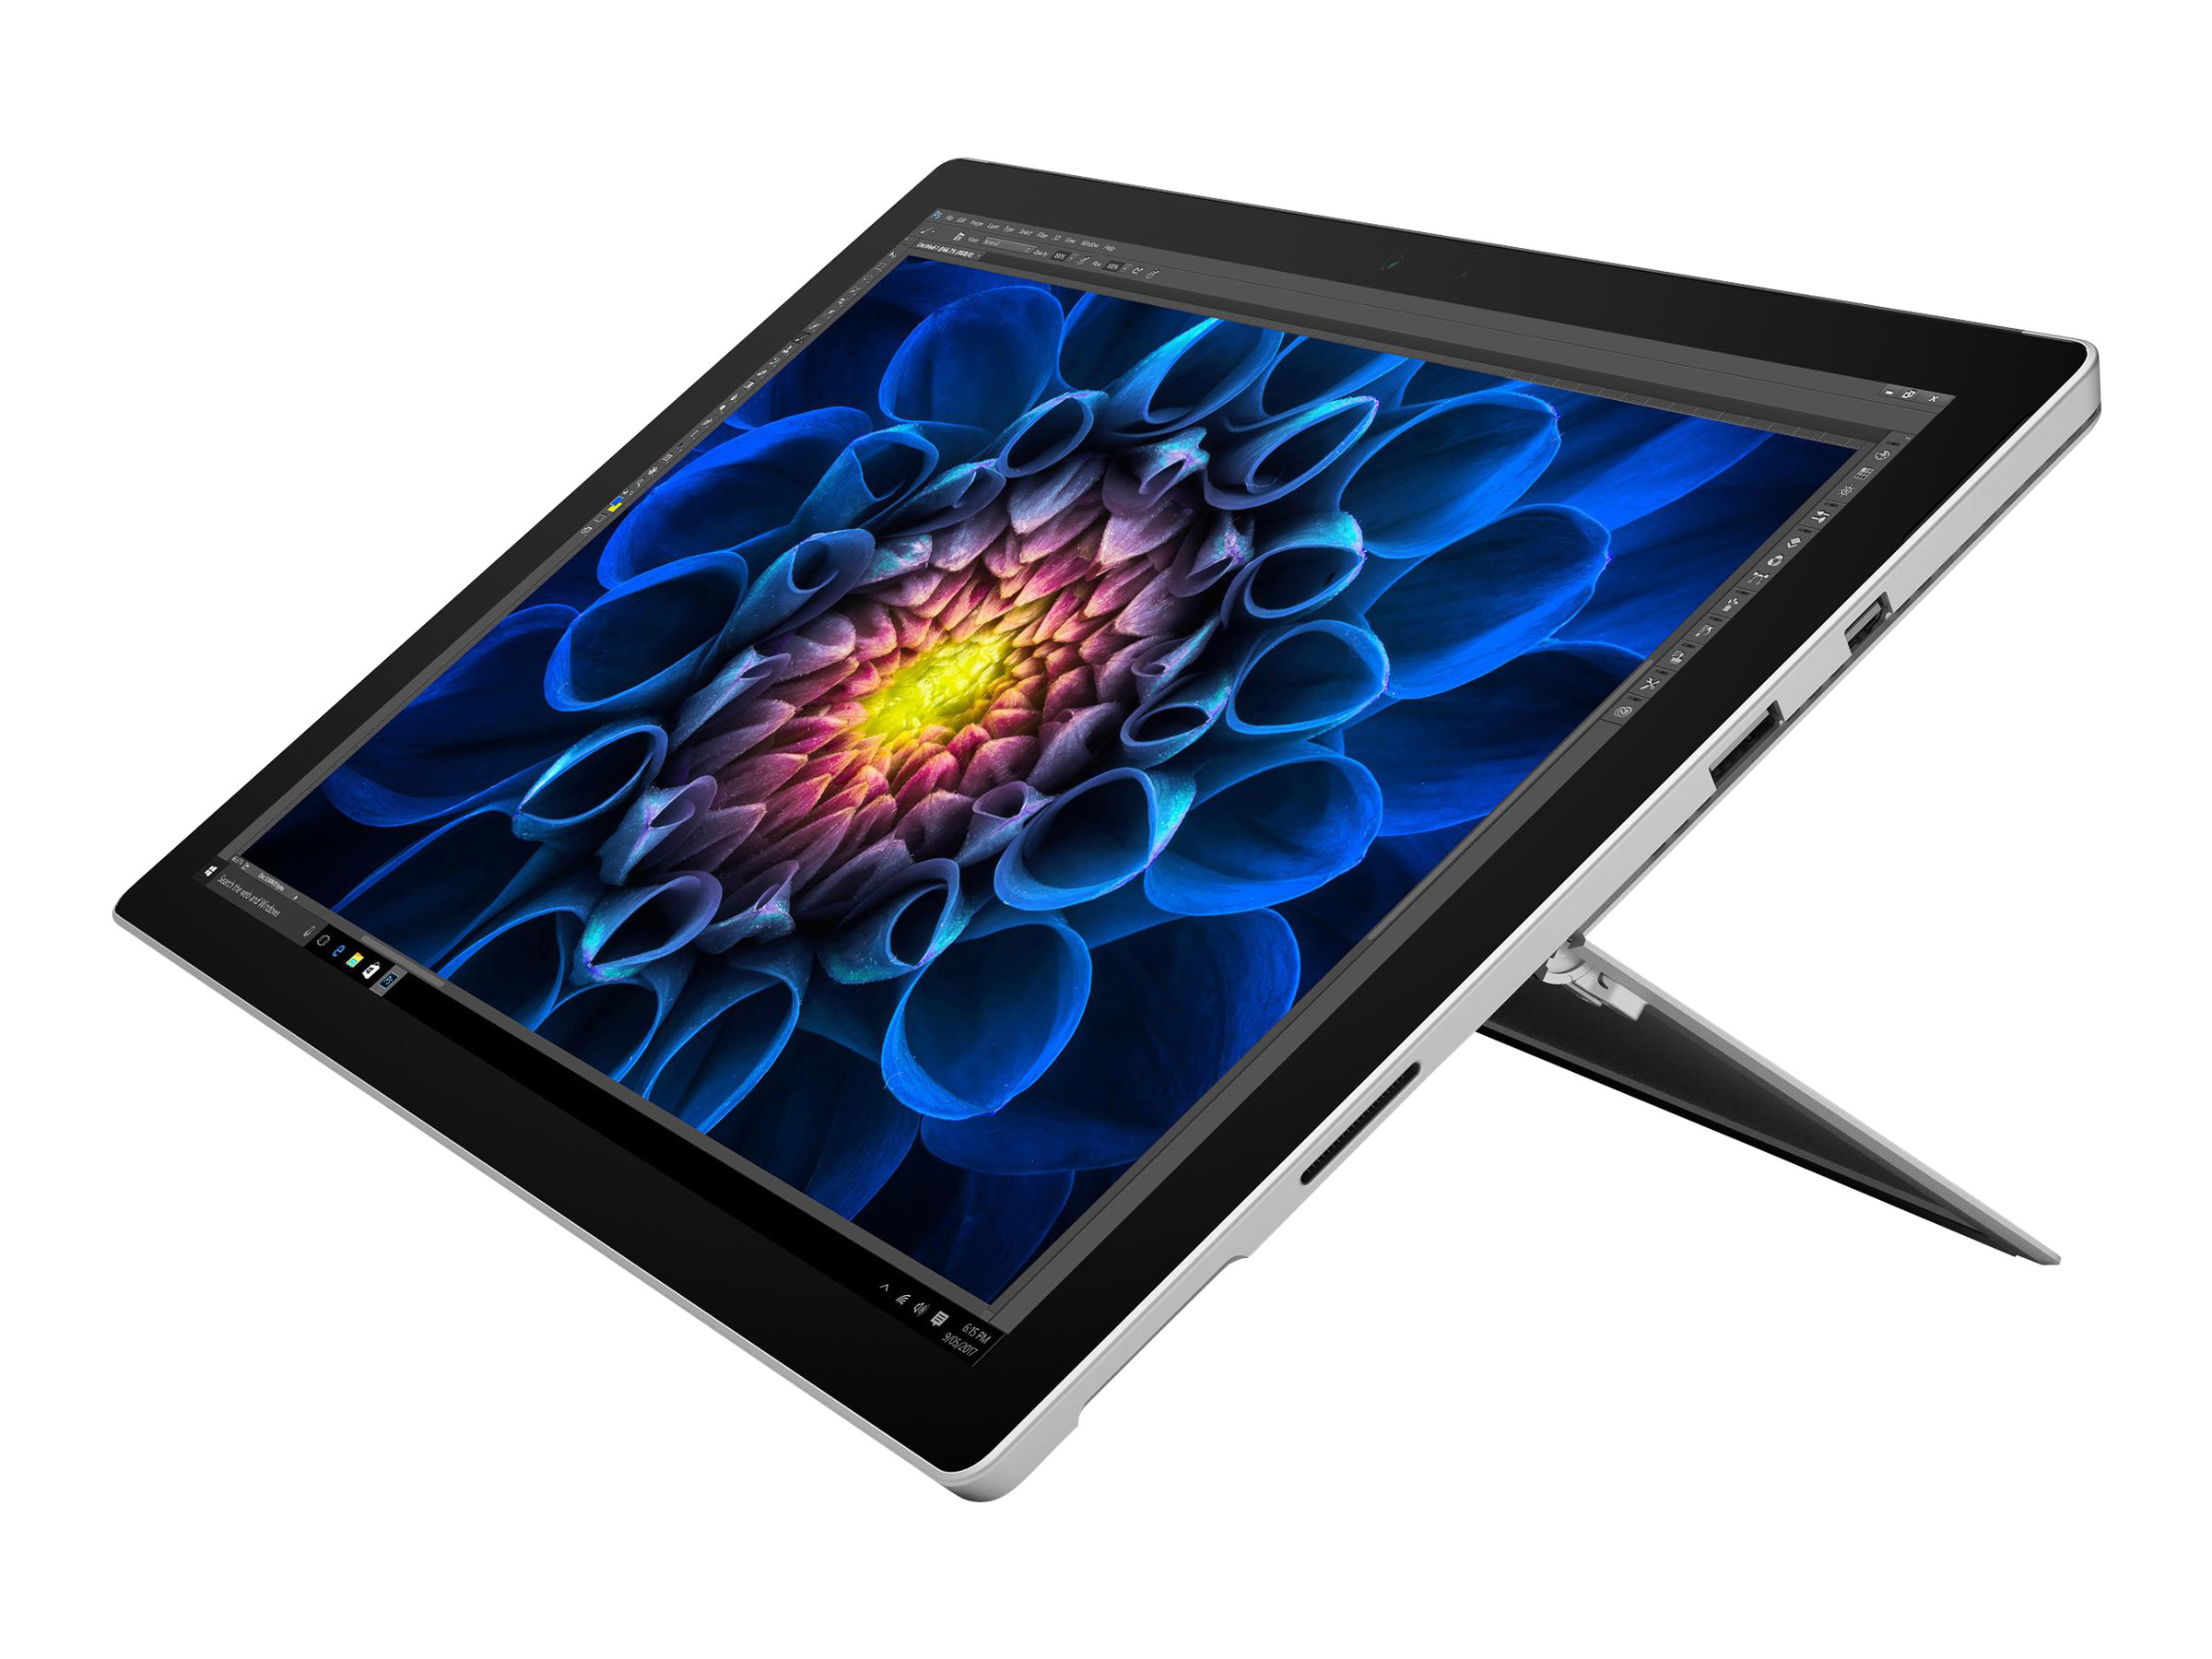 Microsoft Surface Pro 4 | www.shi.com